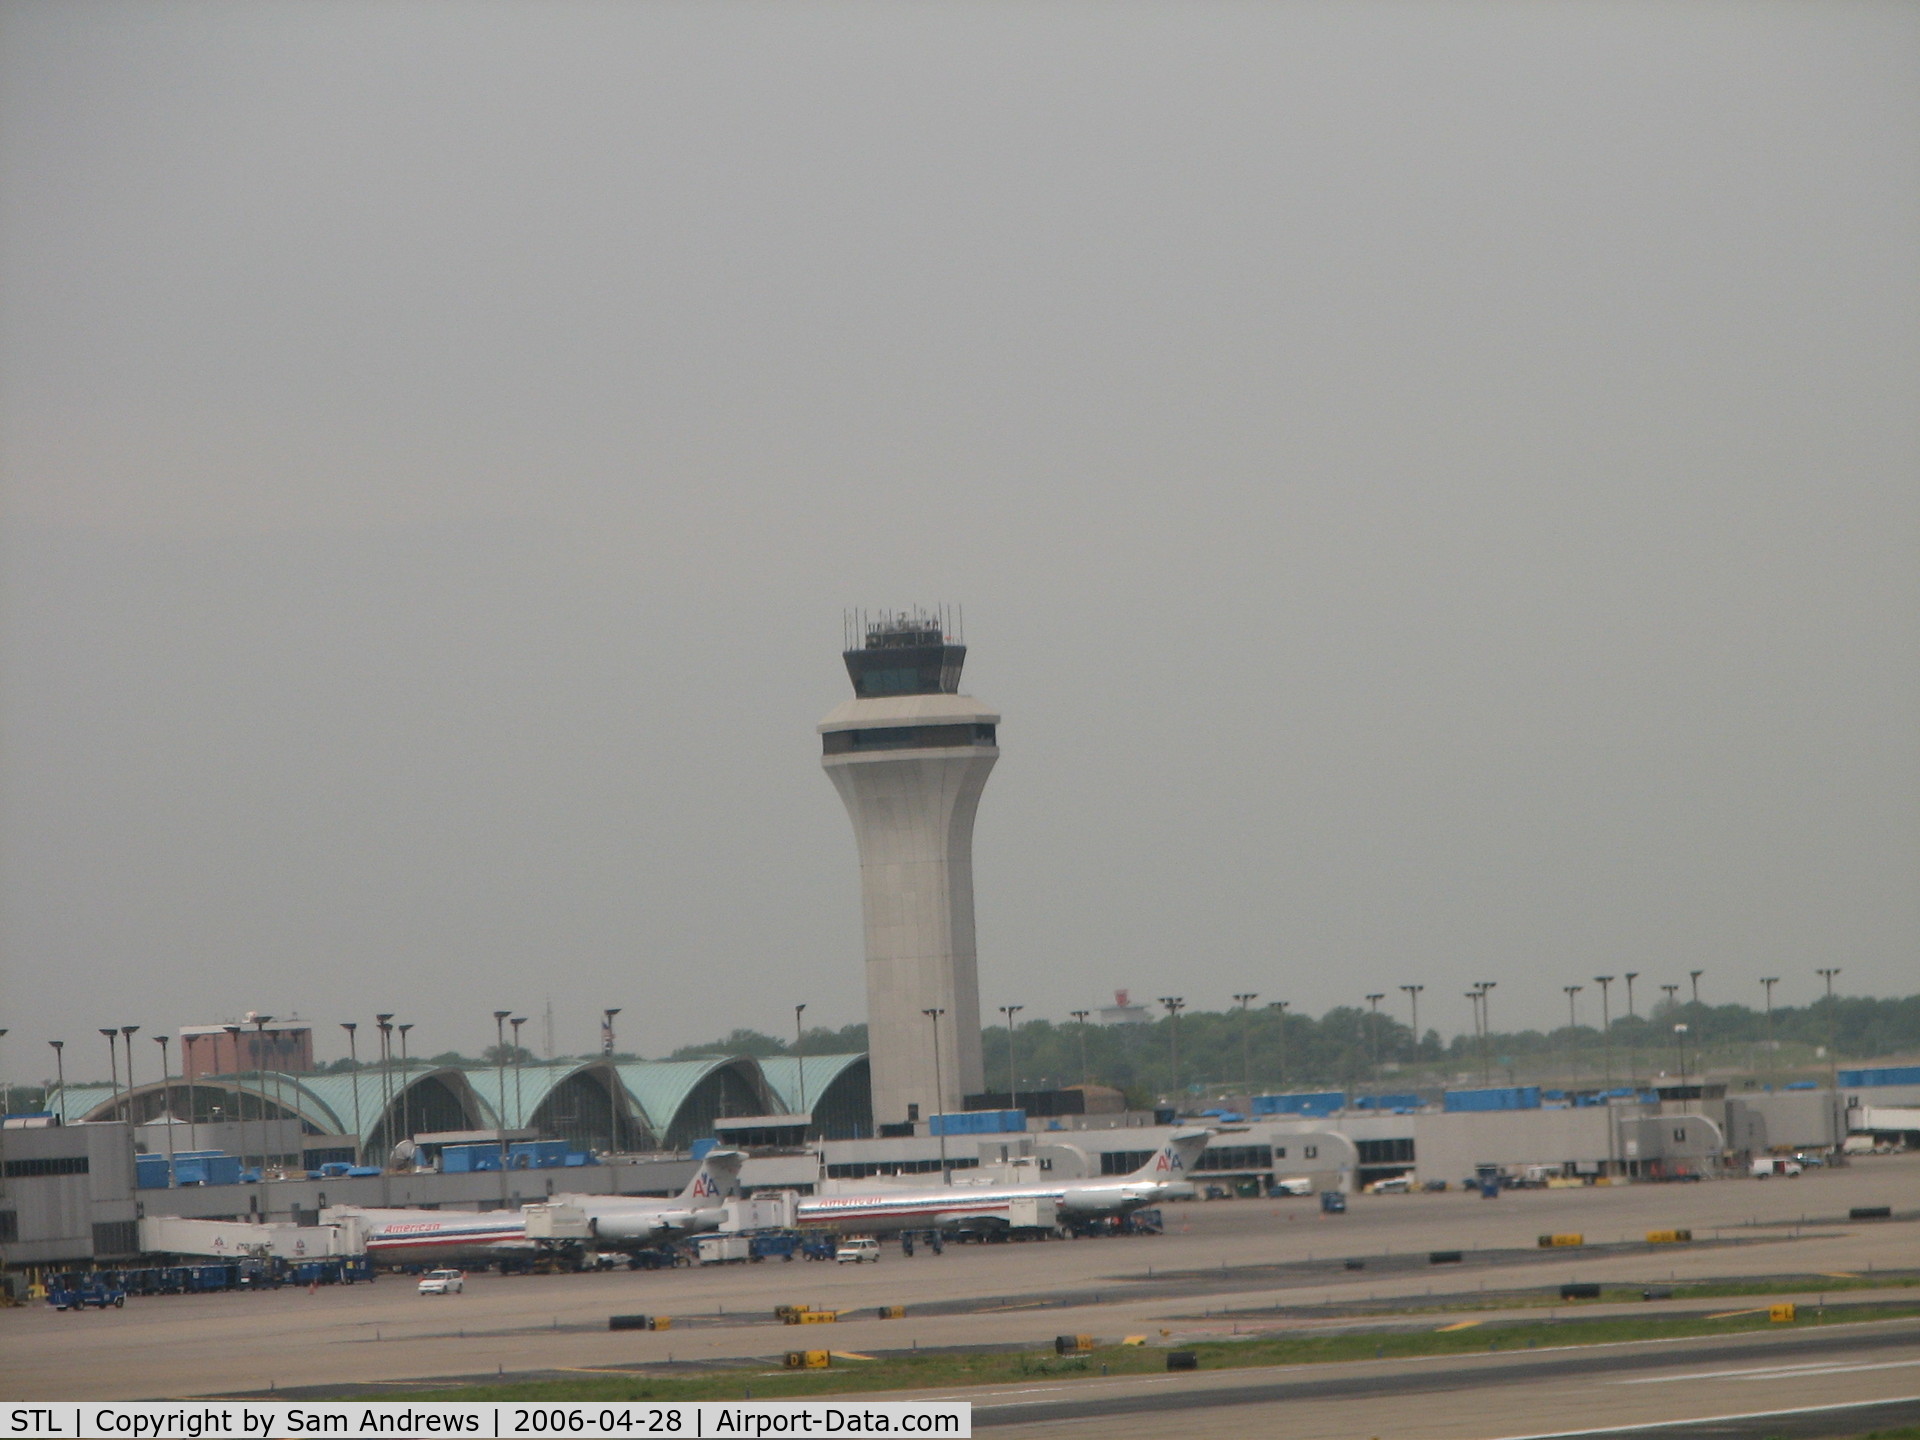 Lambert-st Louis International Airport (STL) - Tower shot